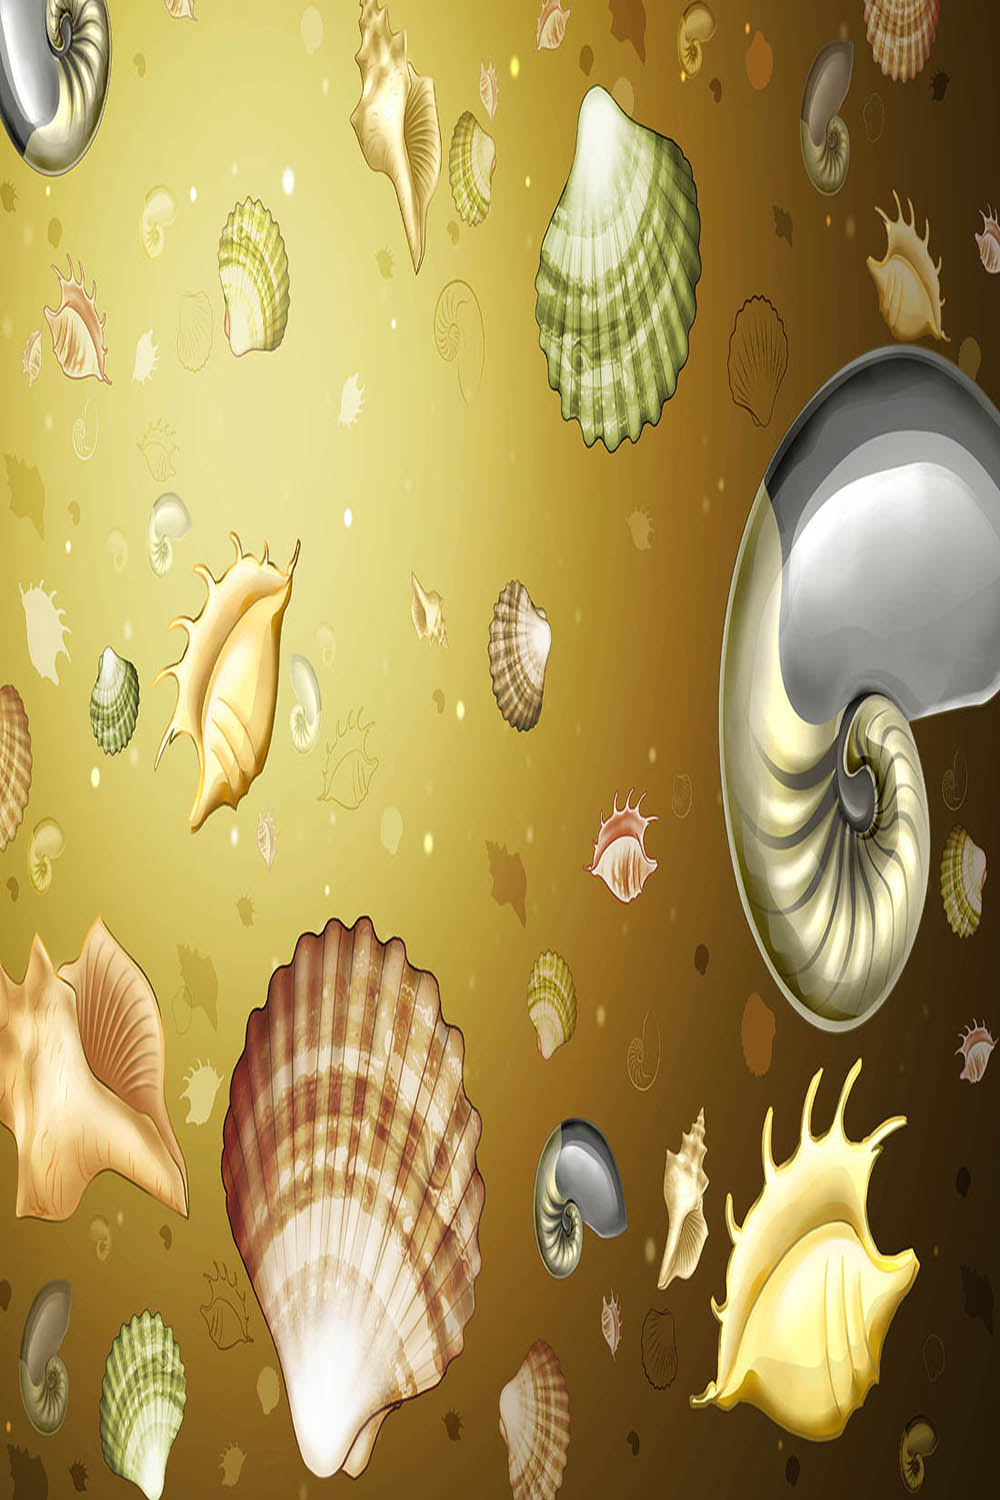 Sea snails Background-psd pinterest preview image.